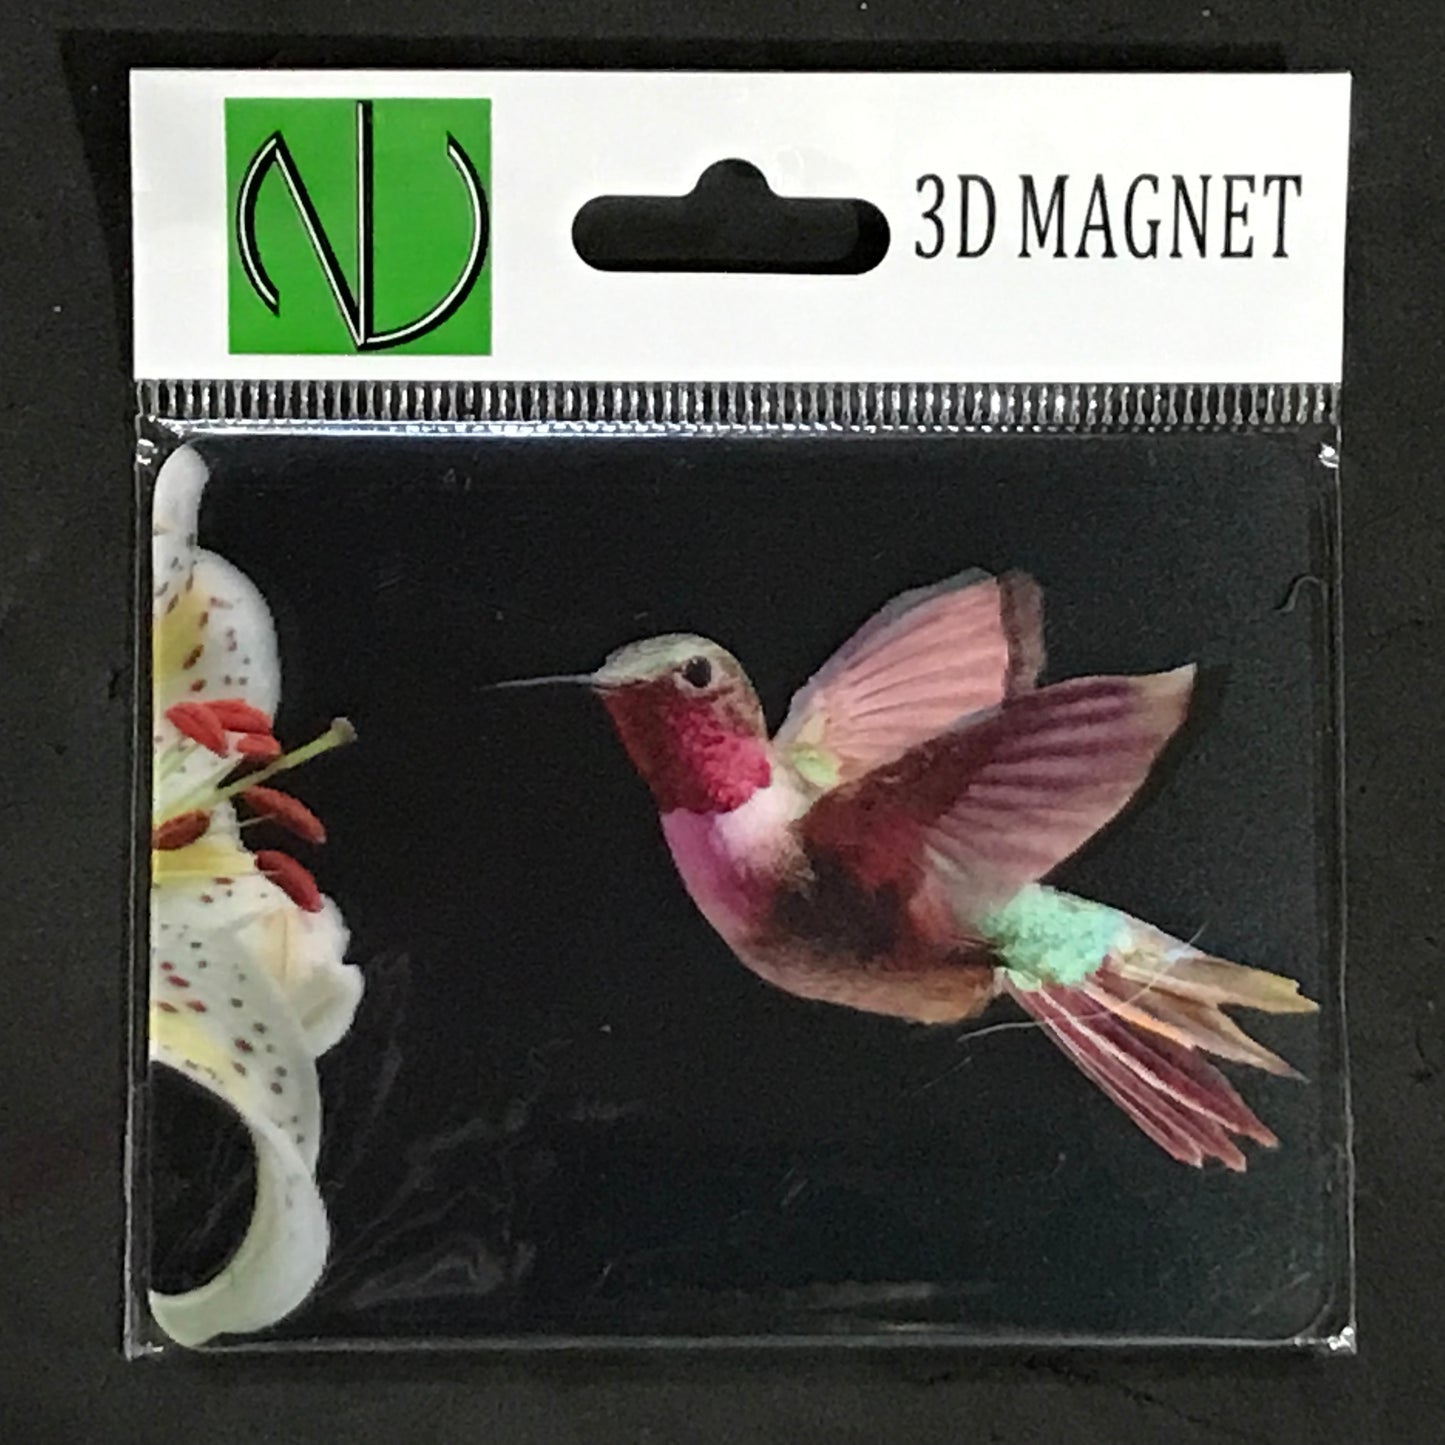 HUMMINGBIRD-1 3D LENTICULAR MAGNET 2.75" X 3.5"